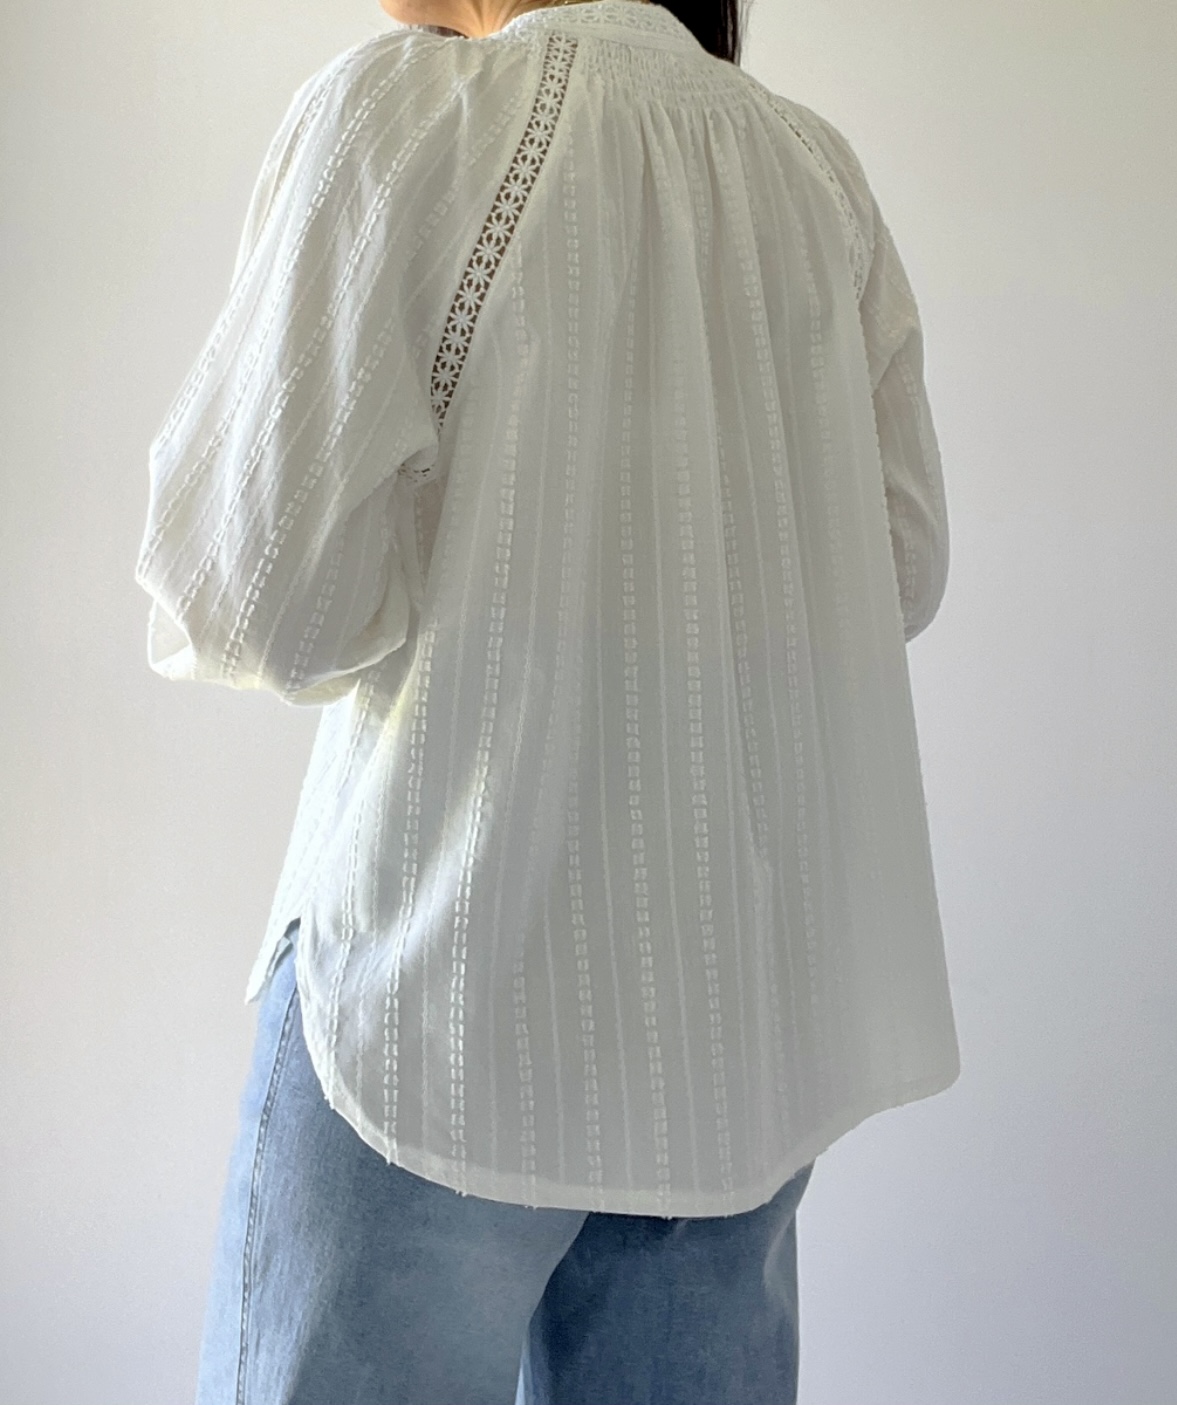 la chemise joyce blanche -8